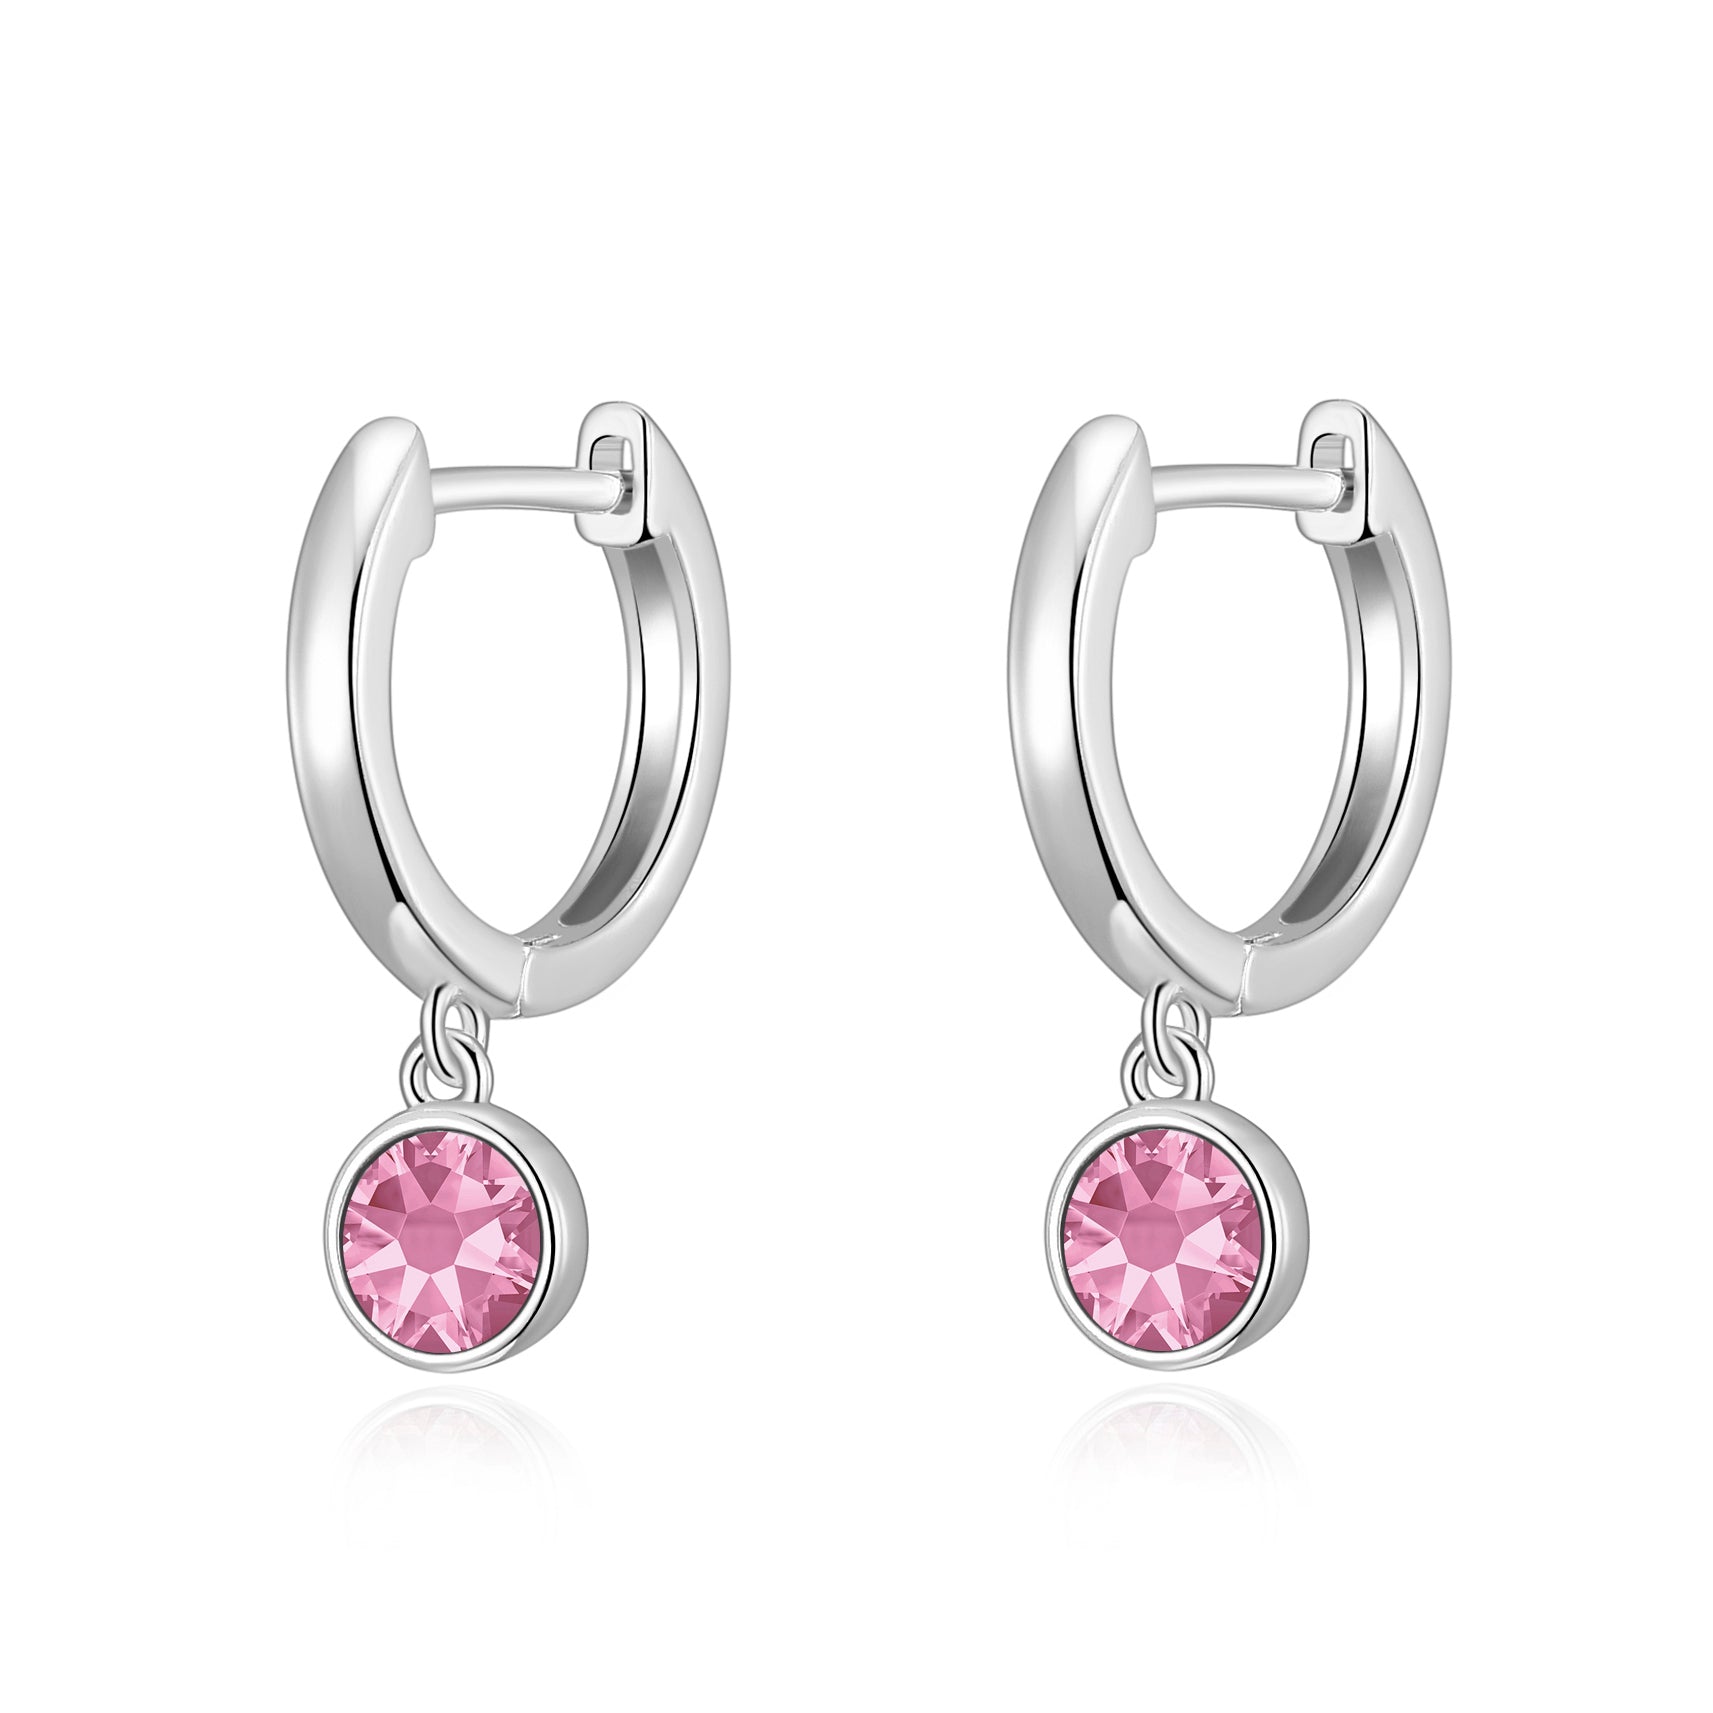 Pink Crystal Hoop Earrings Created with Zircondia® Crystals by Philip Jones Jewellery